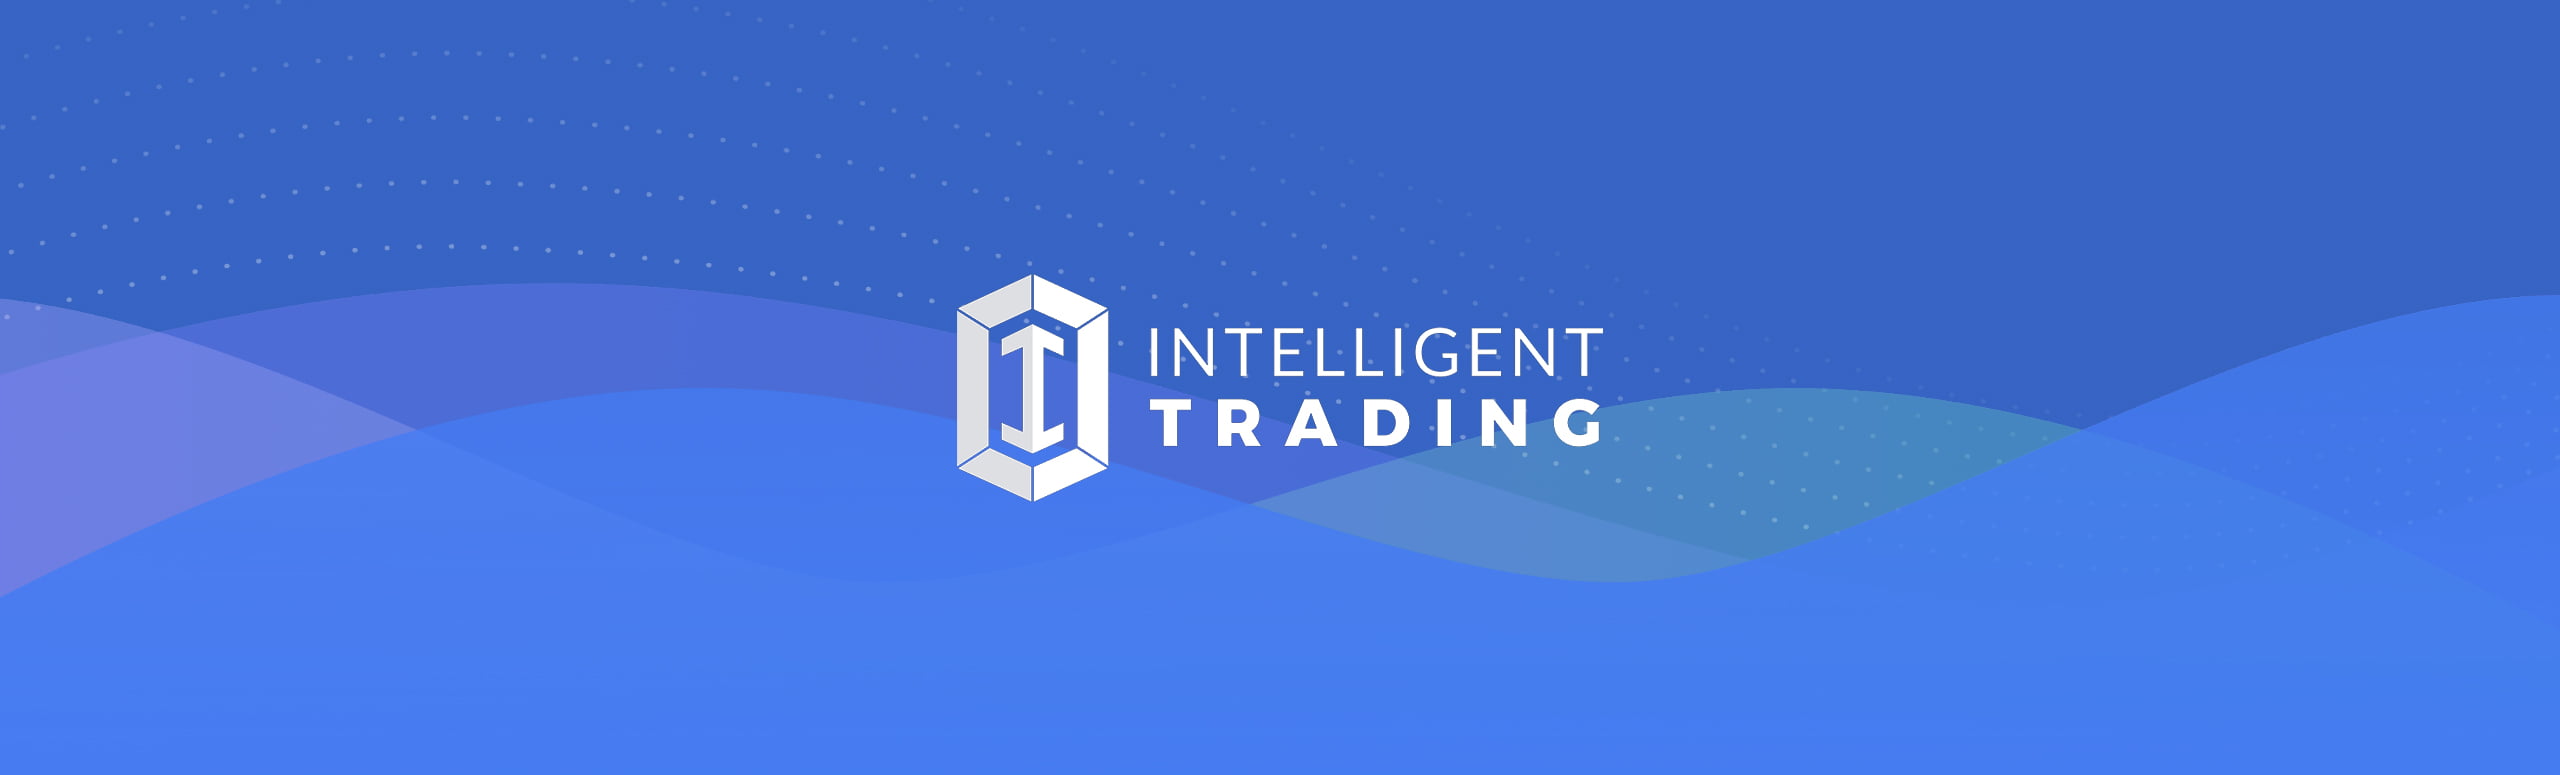 trading bots, intelligent trading, itf